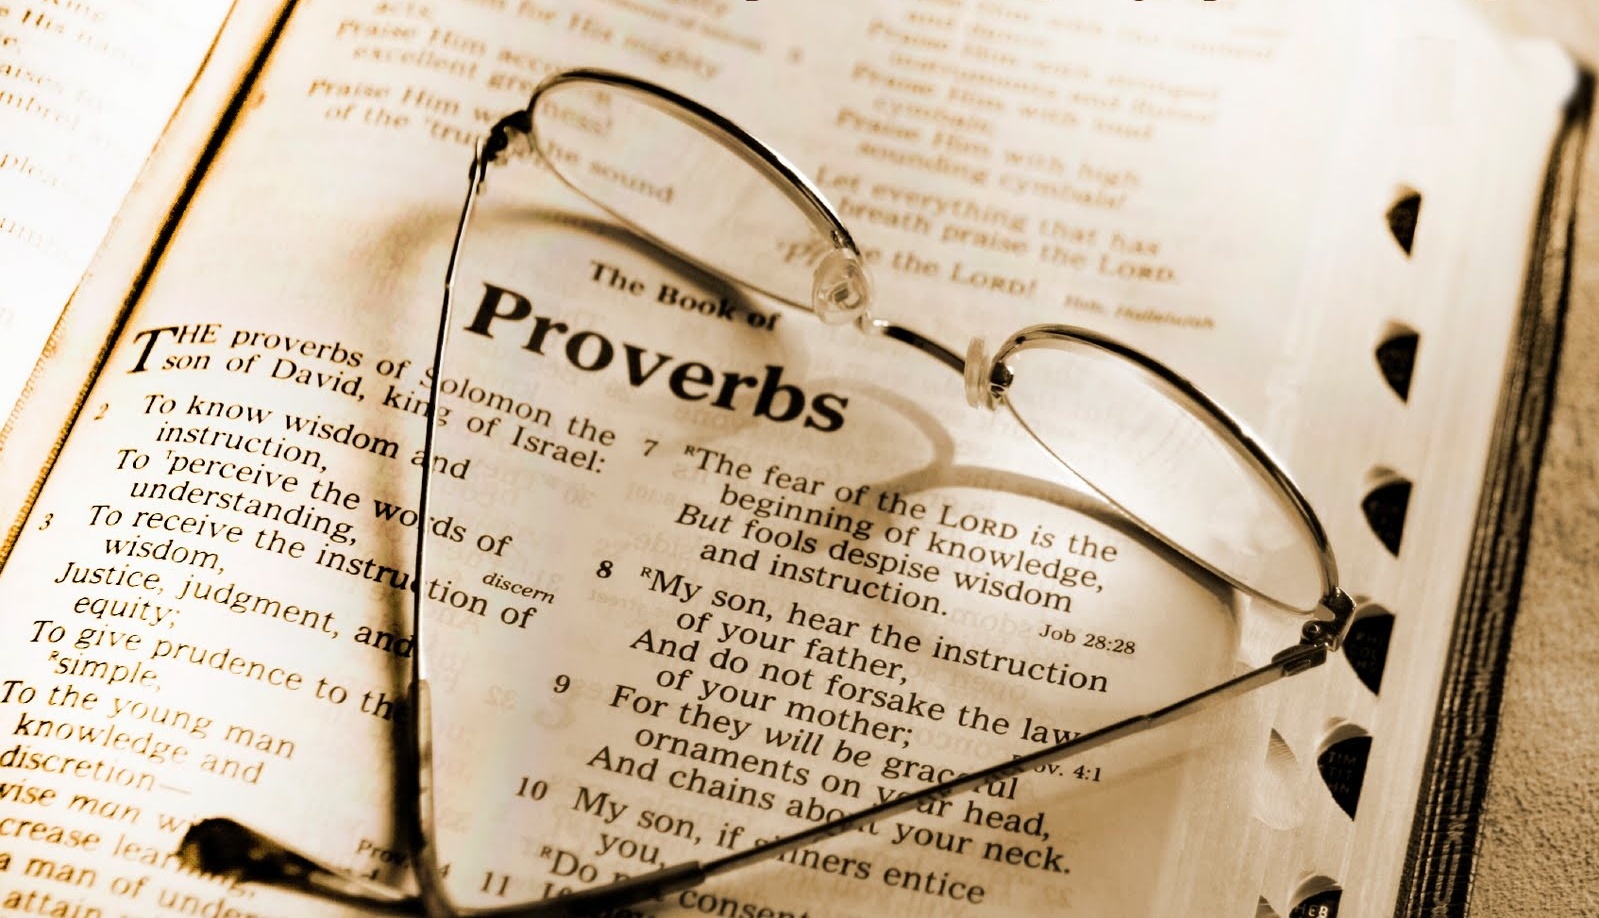 Proverb перевод. Английские пословицы и поговорки. English Proverbs. Proverbs картинки. Иллюстрации британских поговорок.